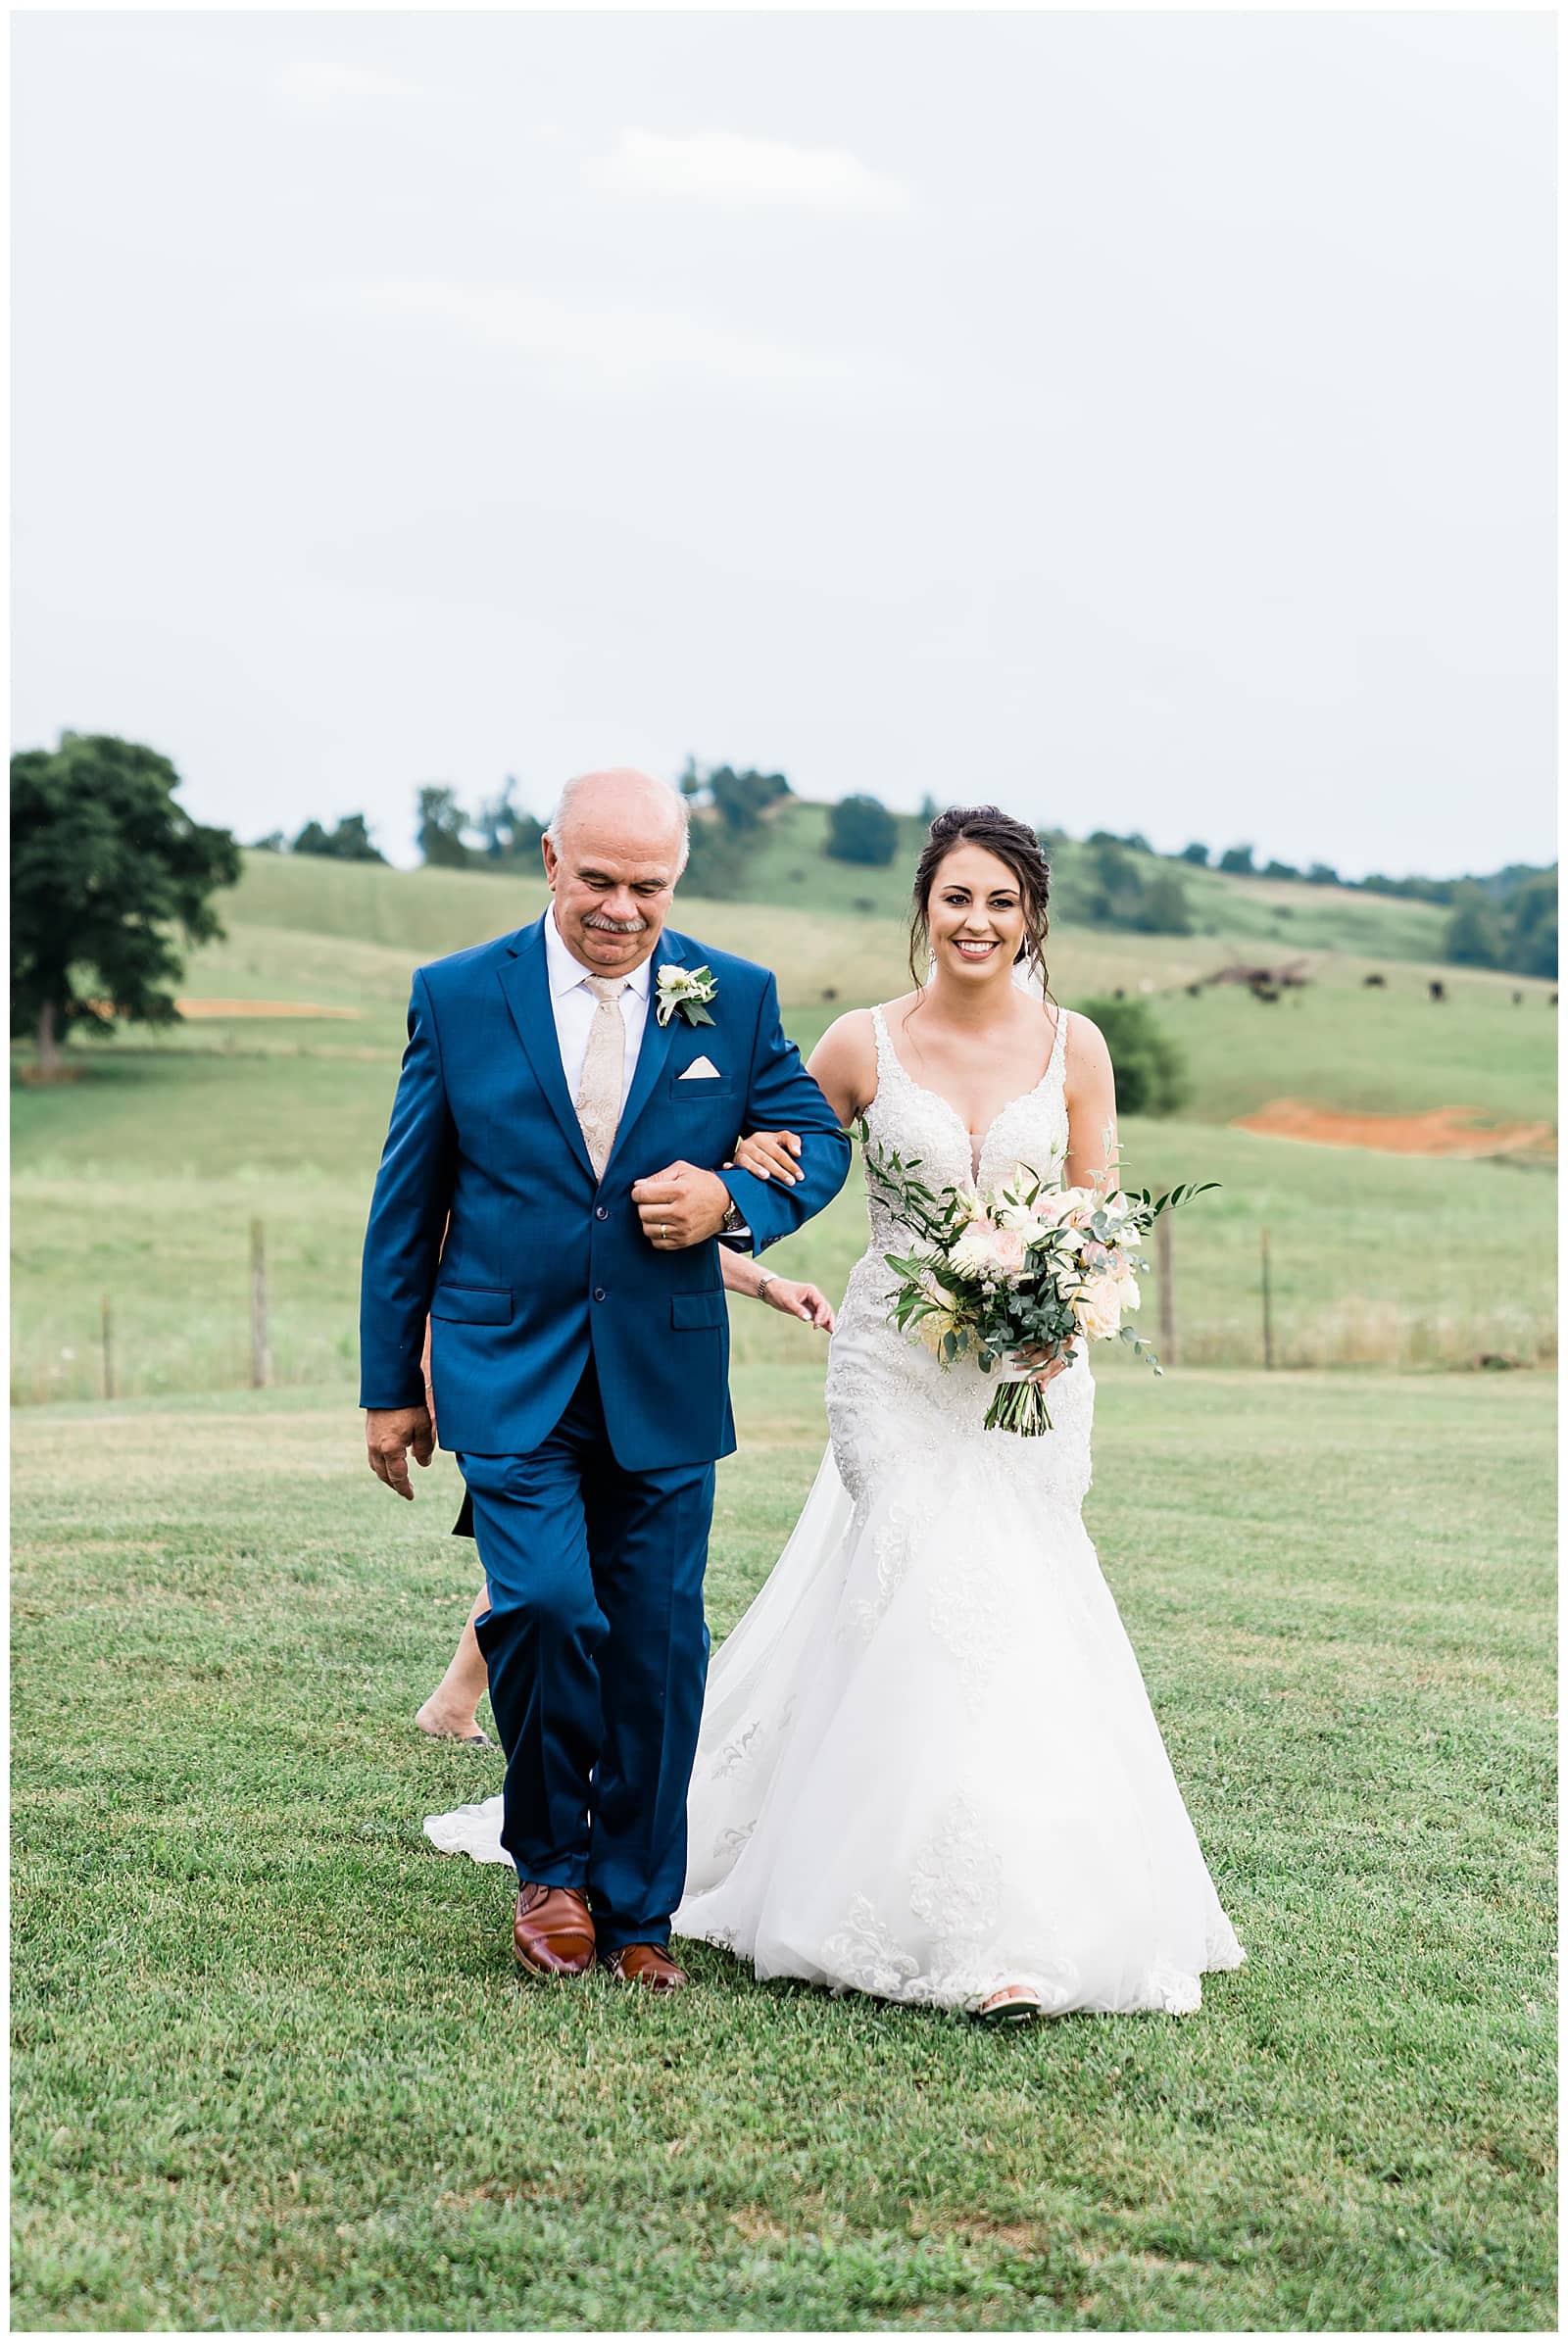 Danielle-Defayette-Photography-Middle-Fork-Barn-Wedding-VA-2020_0023.jpg